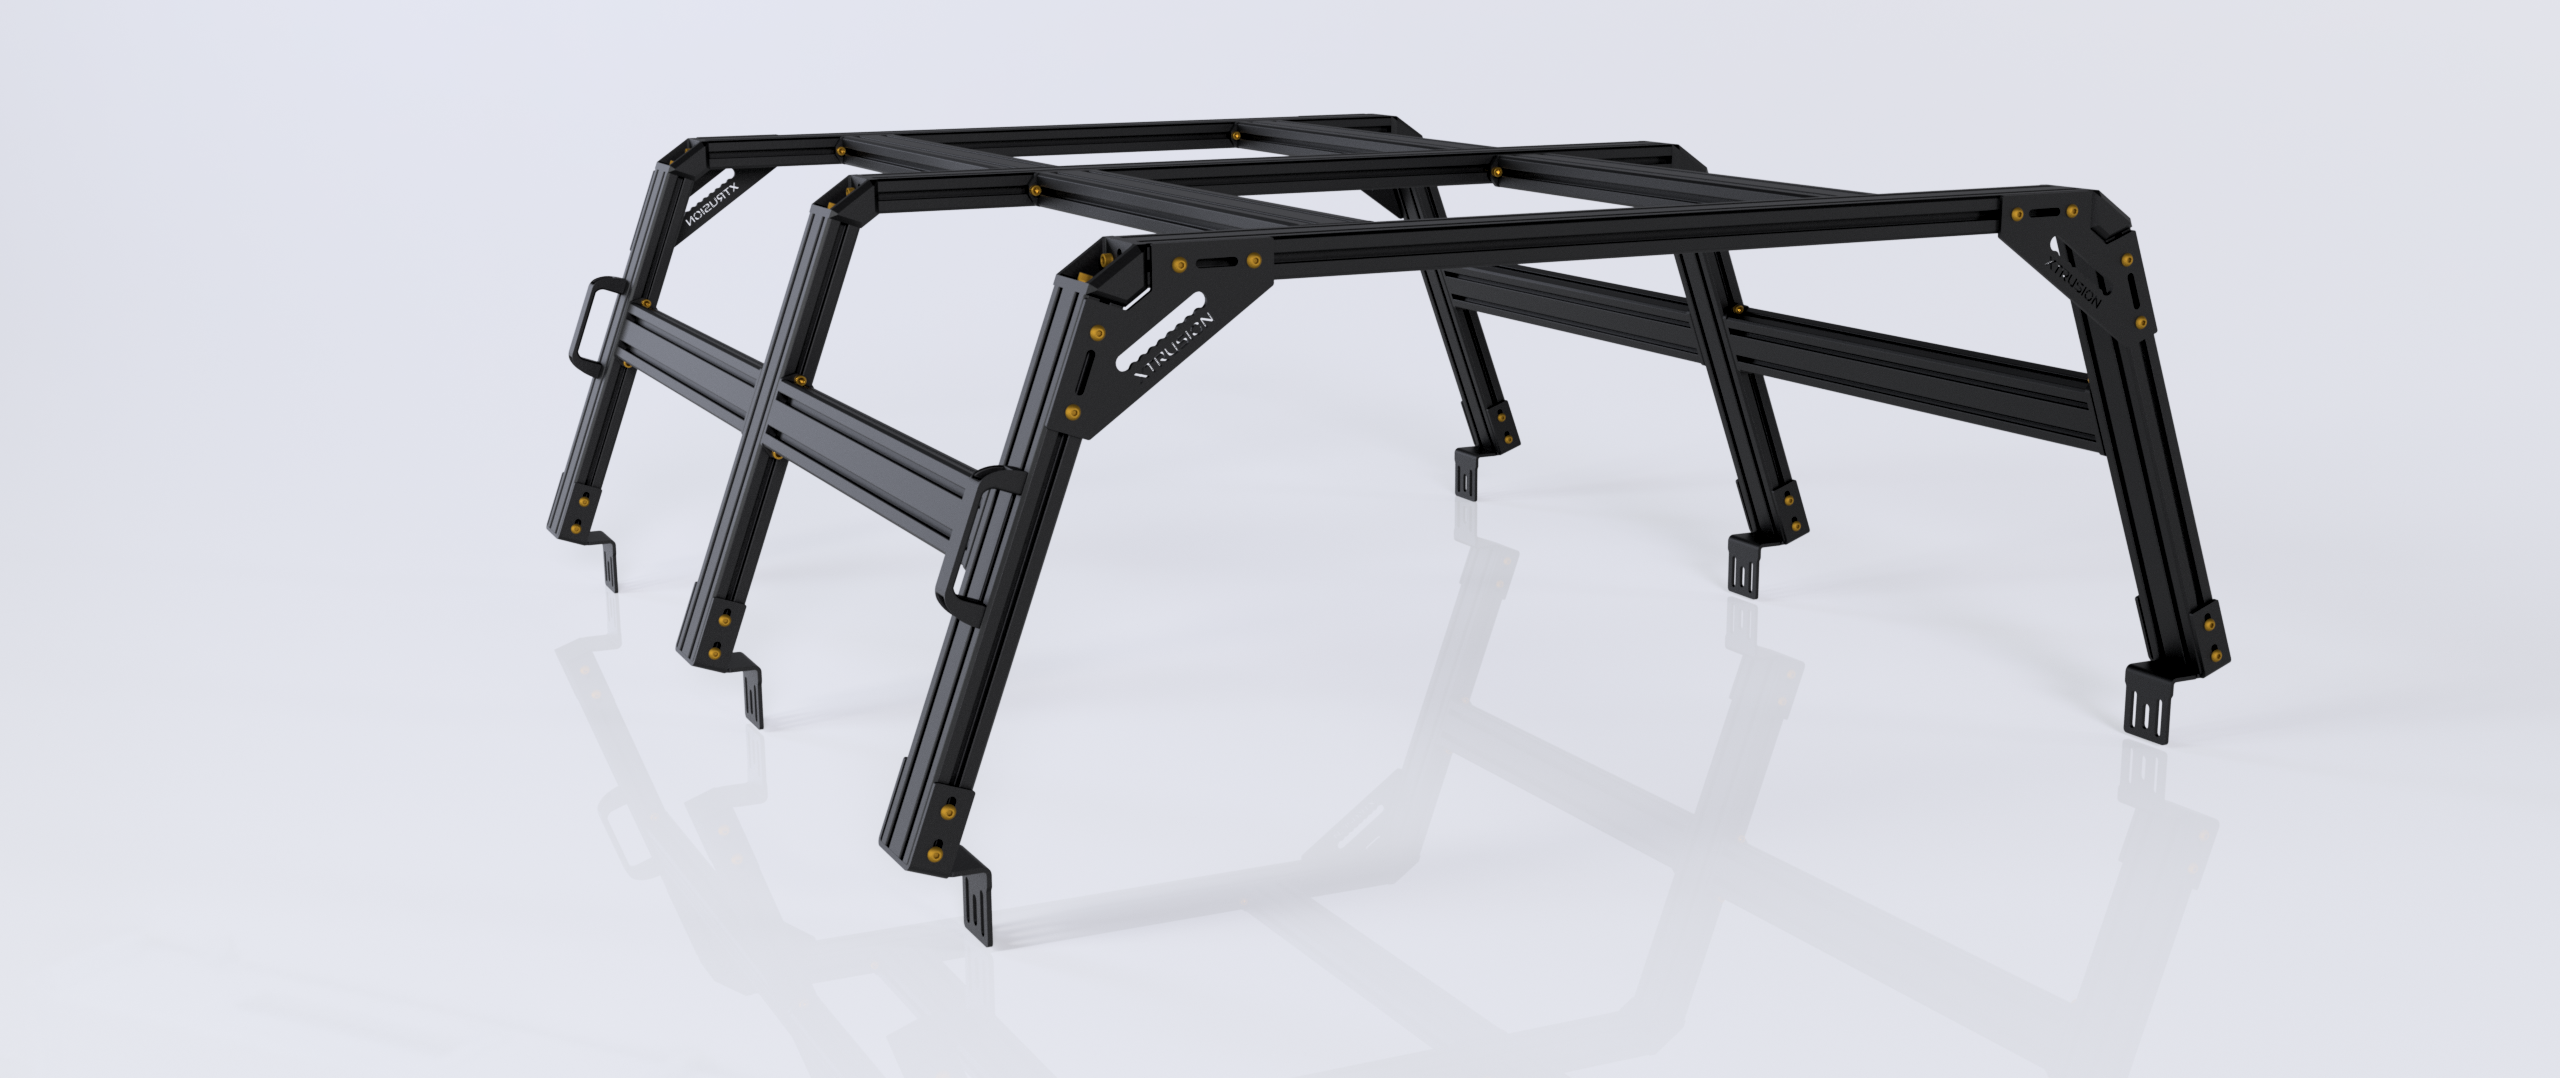 XTR3 Build-Your-Own Bed Rack - Nissan Frontier